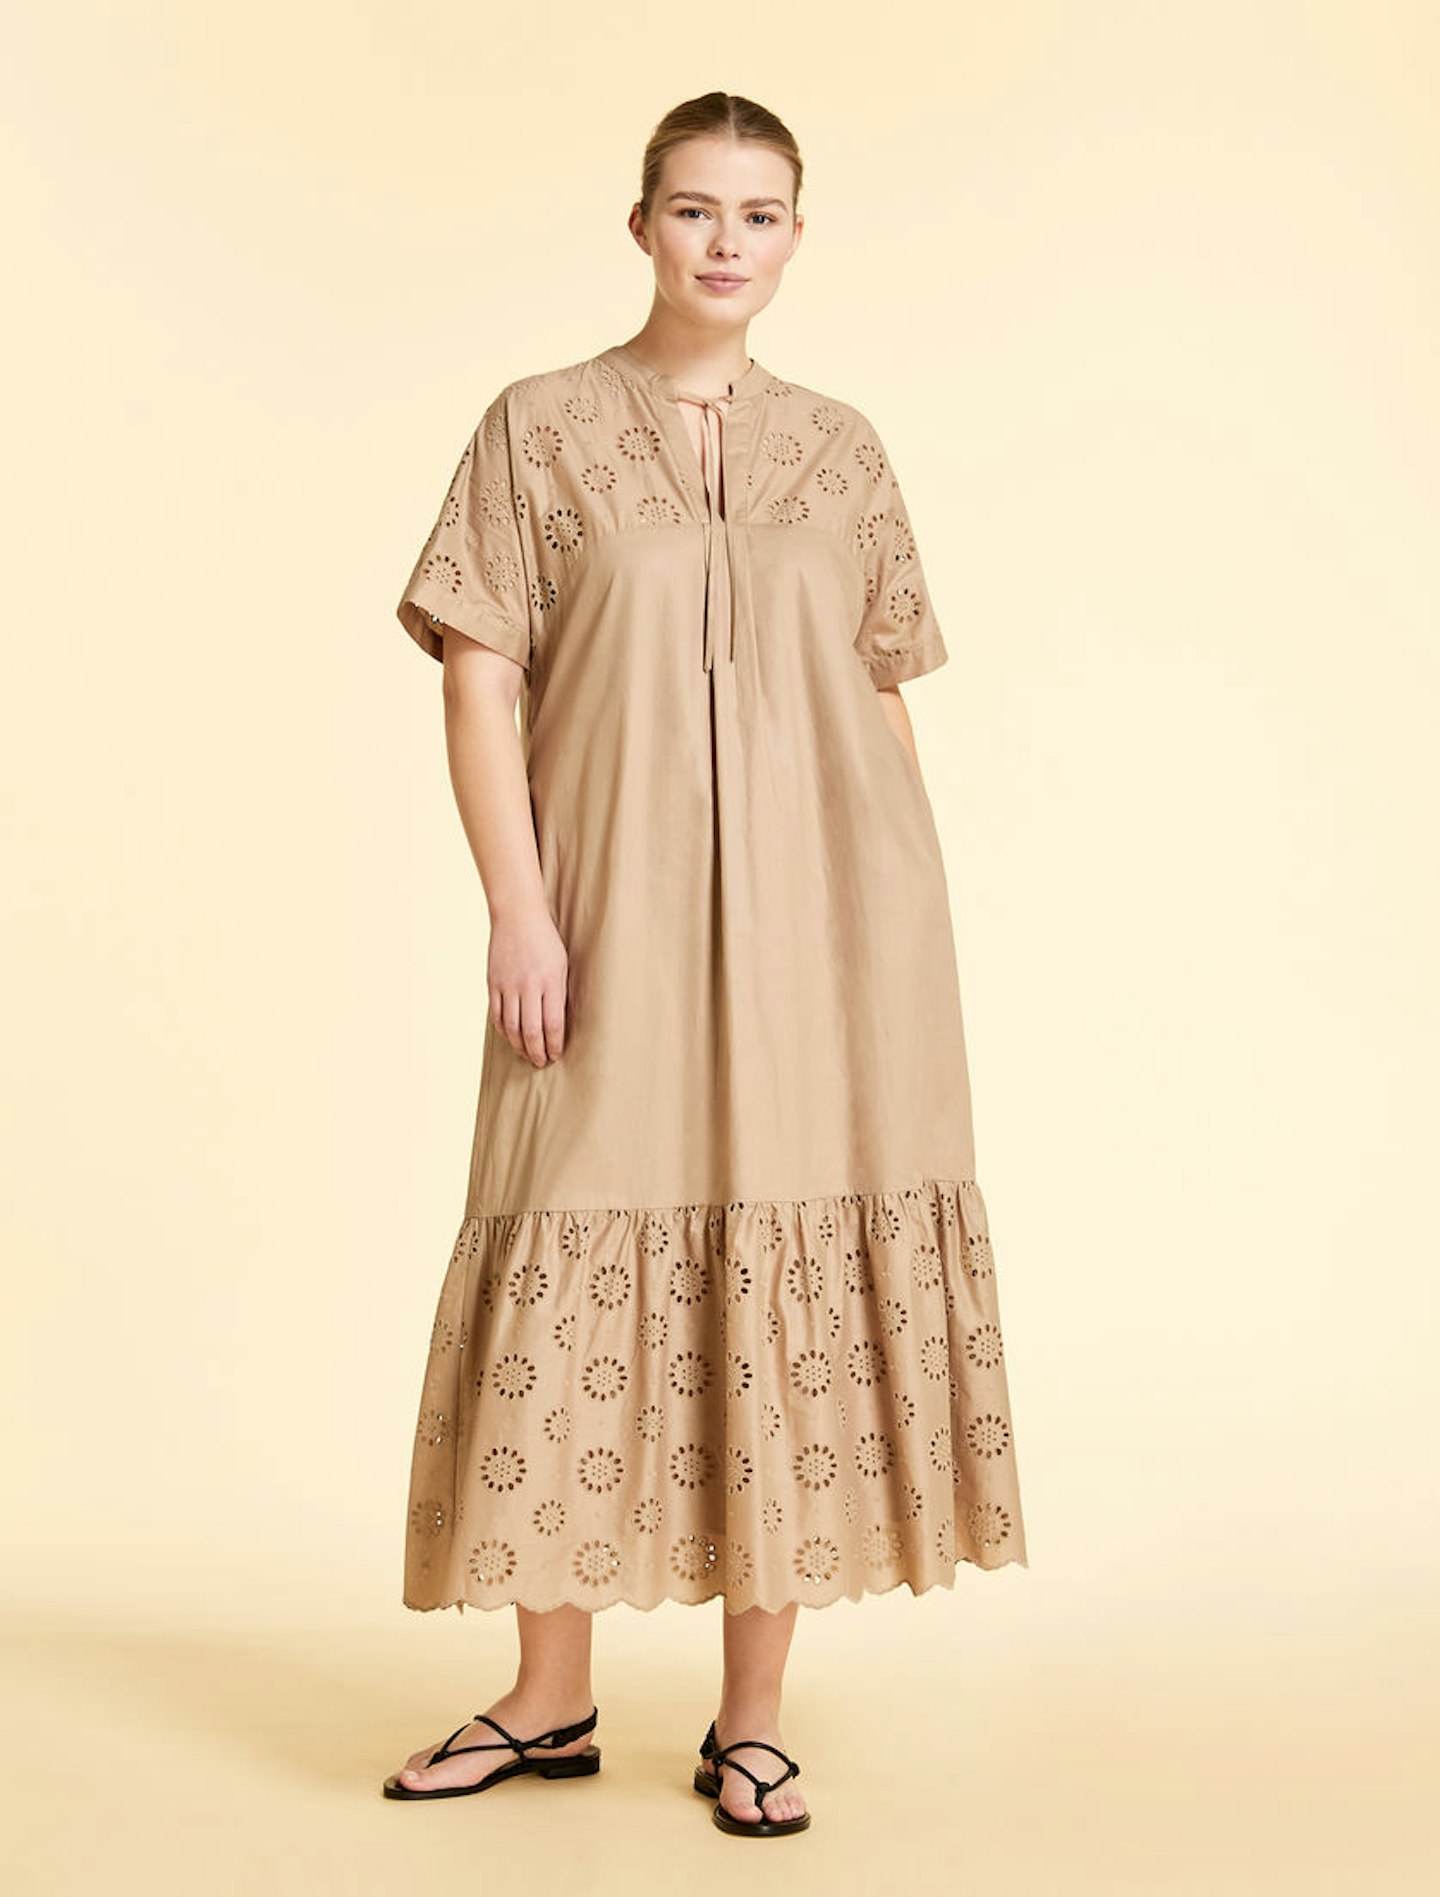 Marina Rinaldi, Cotton Poplin Dress, £355